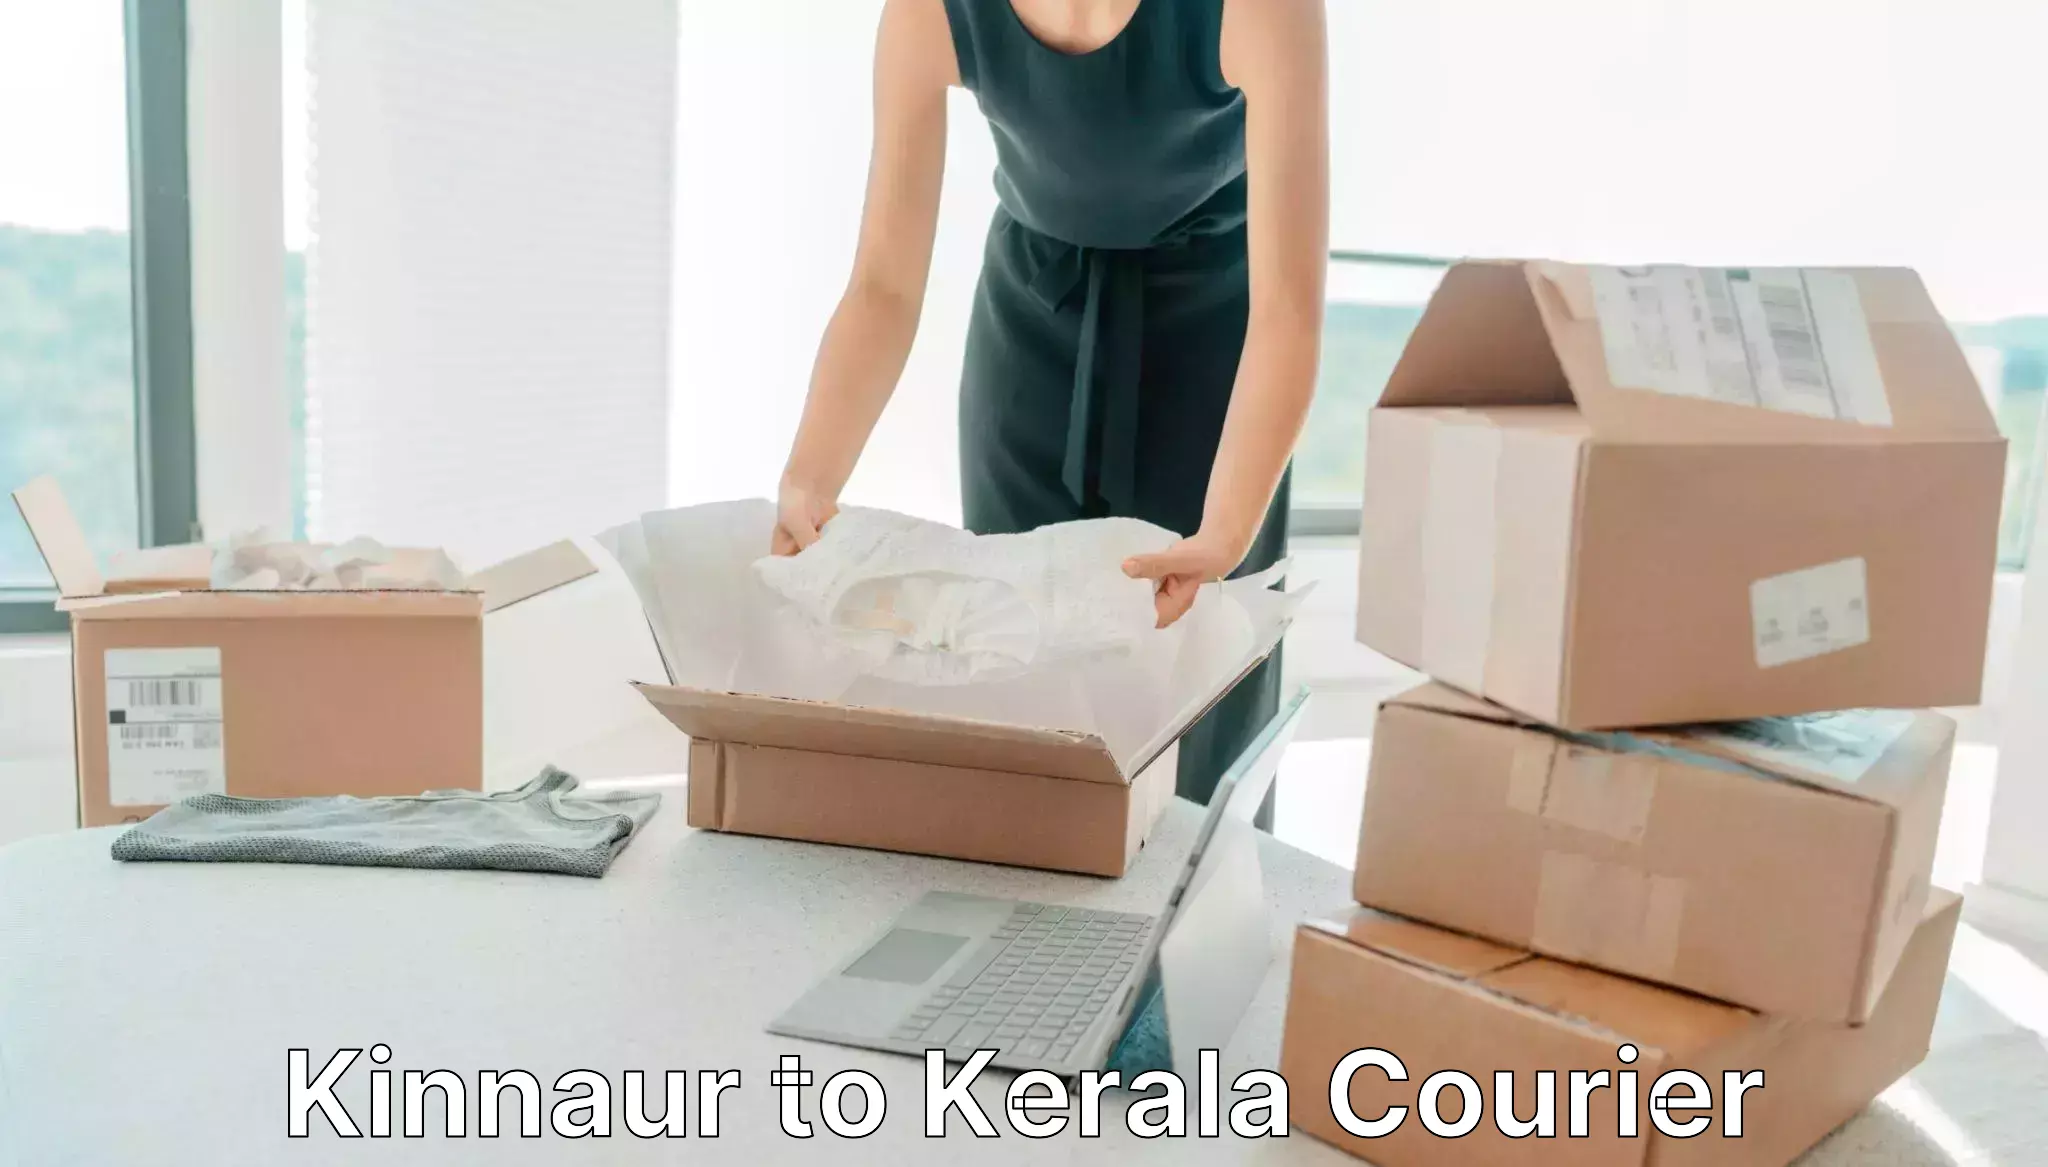 Express delivery capabilities Kinnaur to Kerala